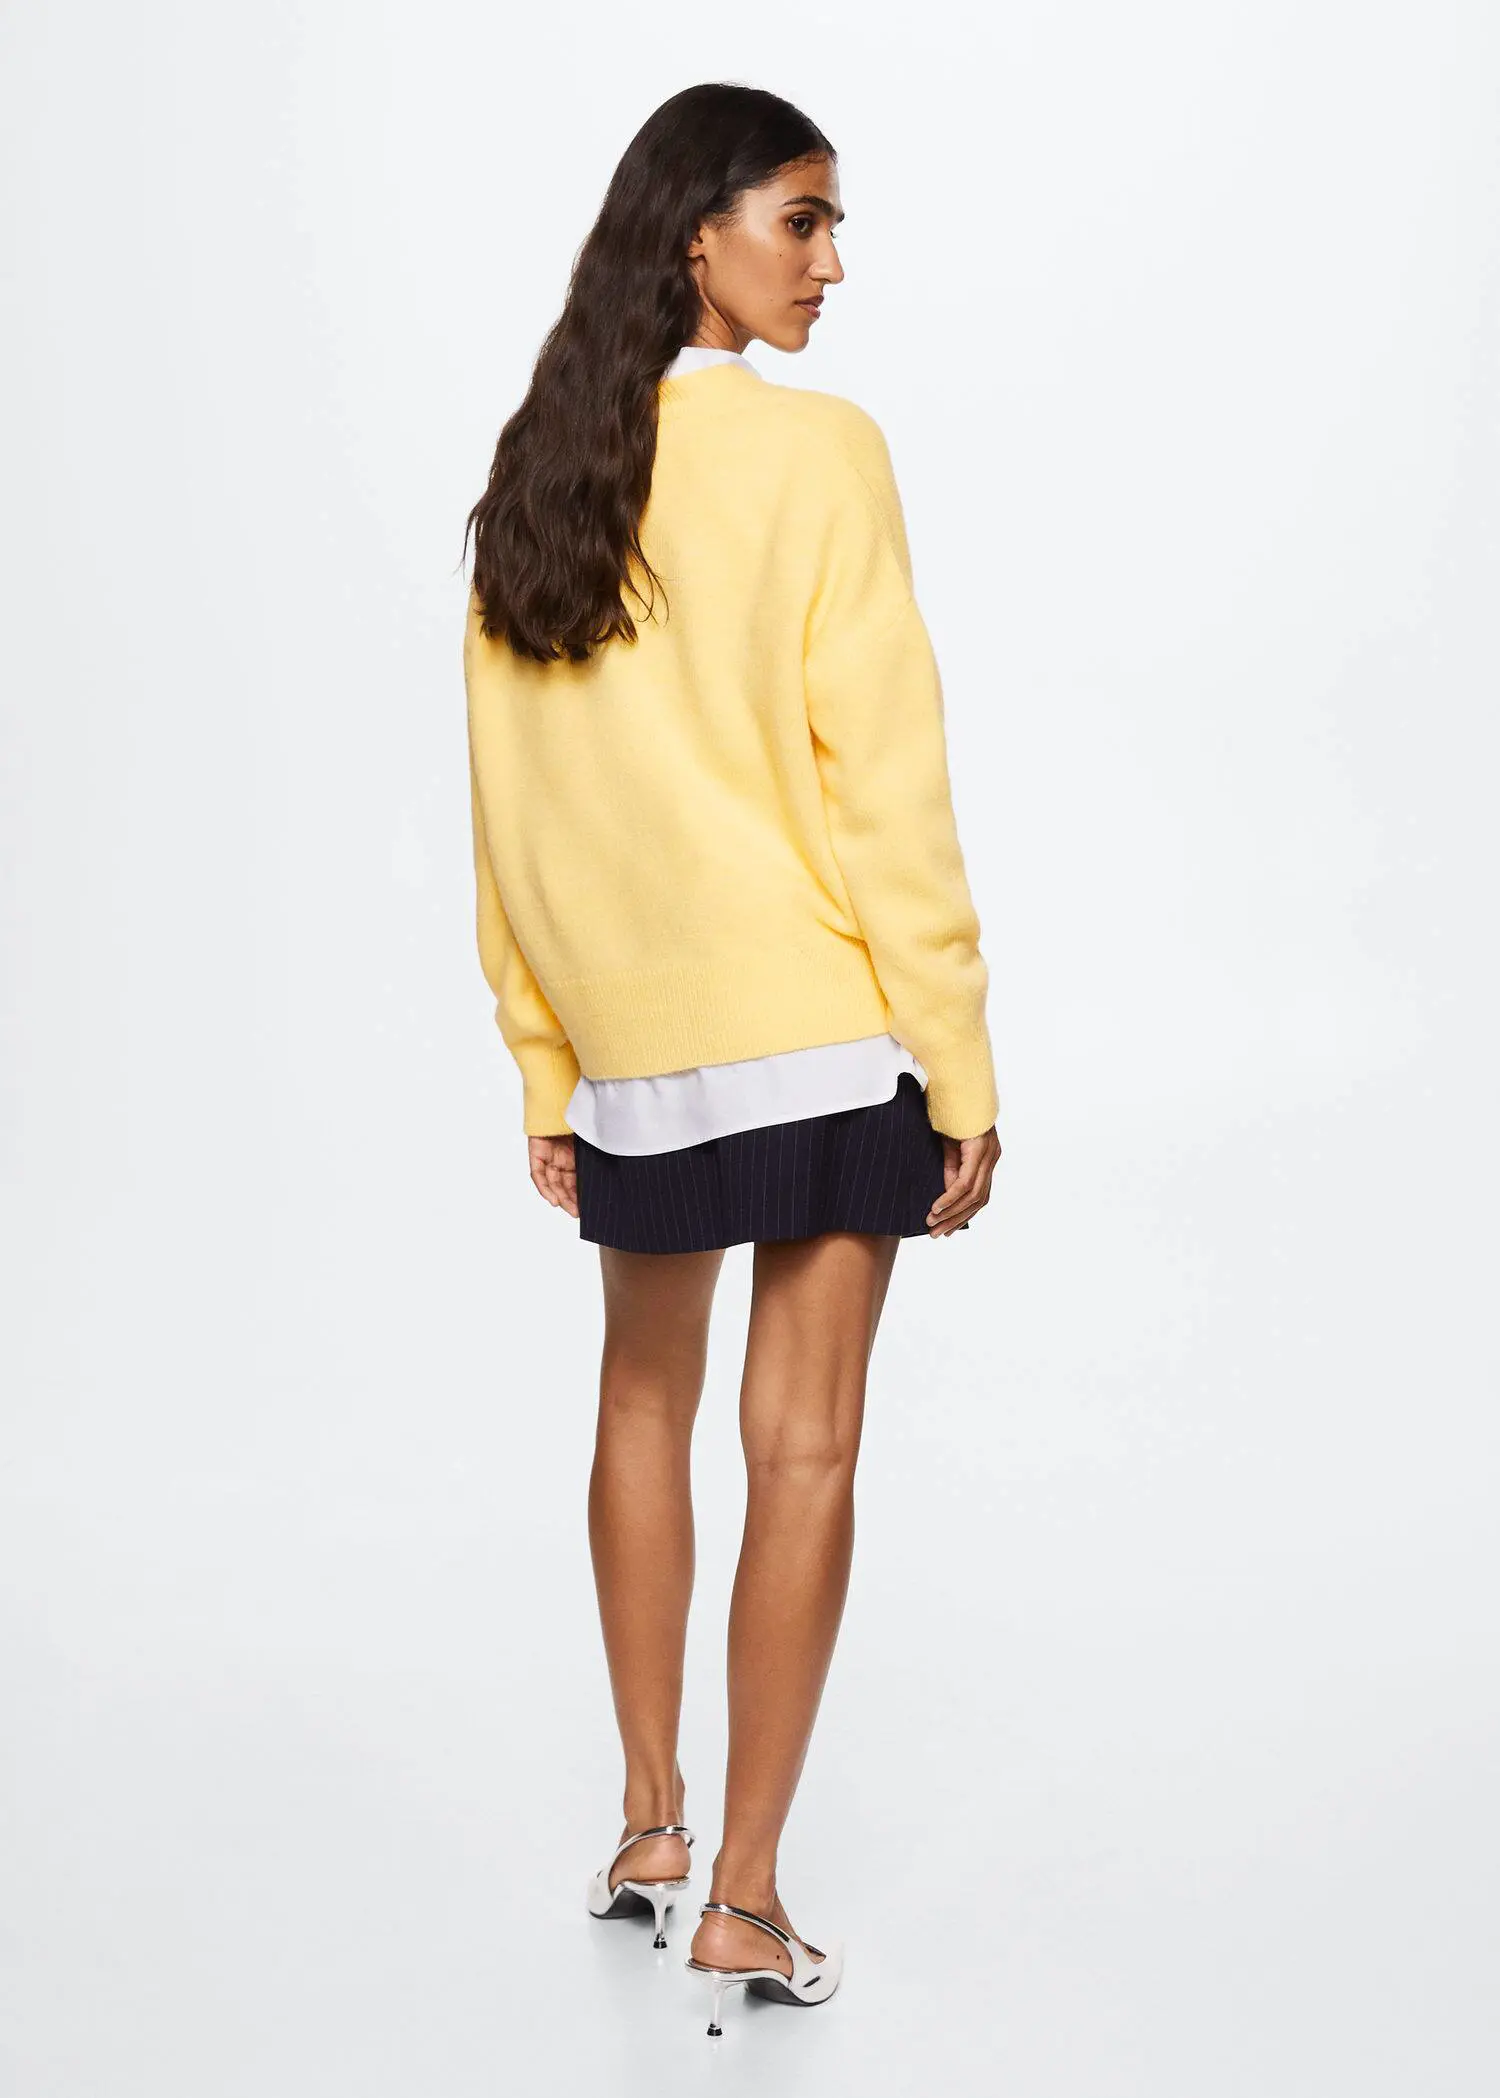 Mango V-neck knit sweater. a woman wearing a yellow sweater and black skirt. 